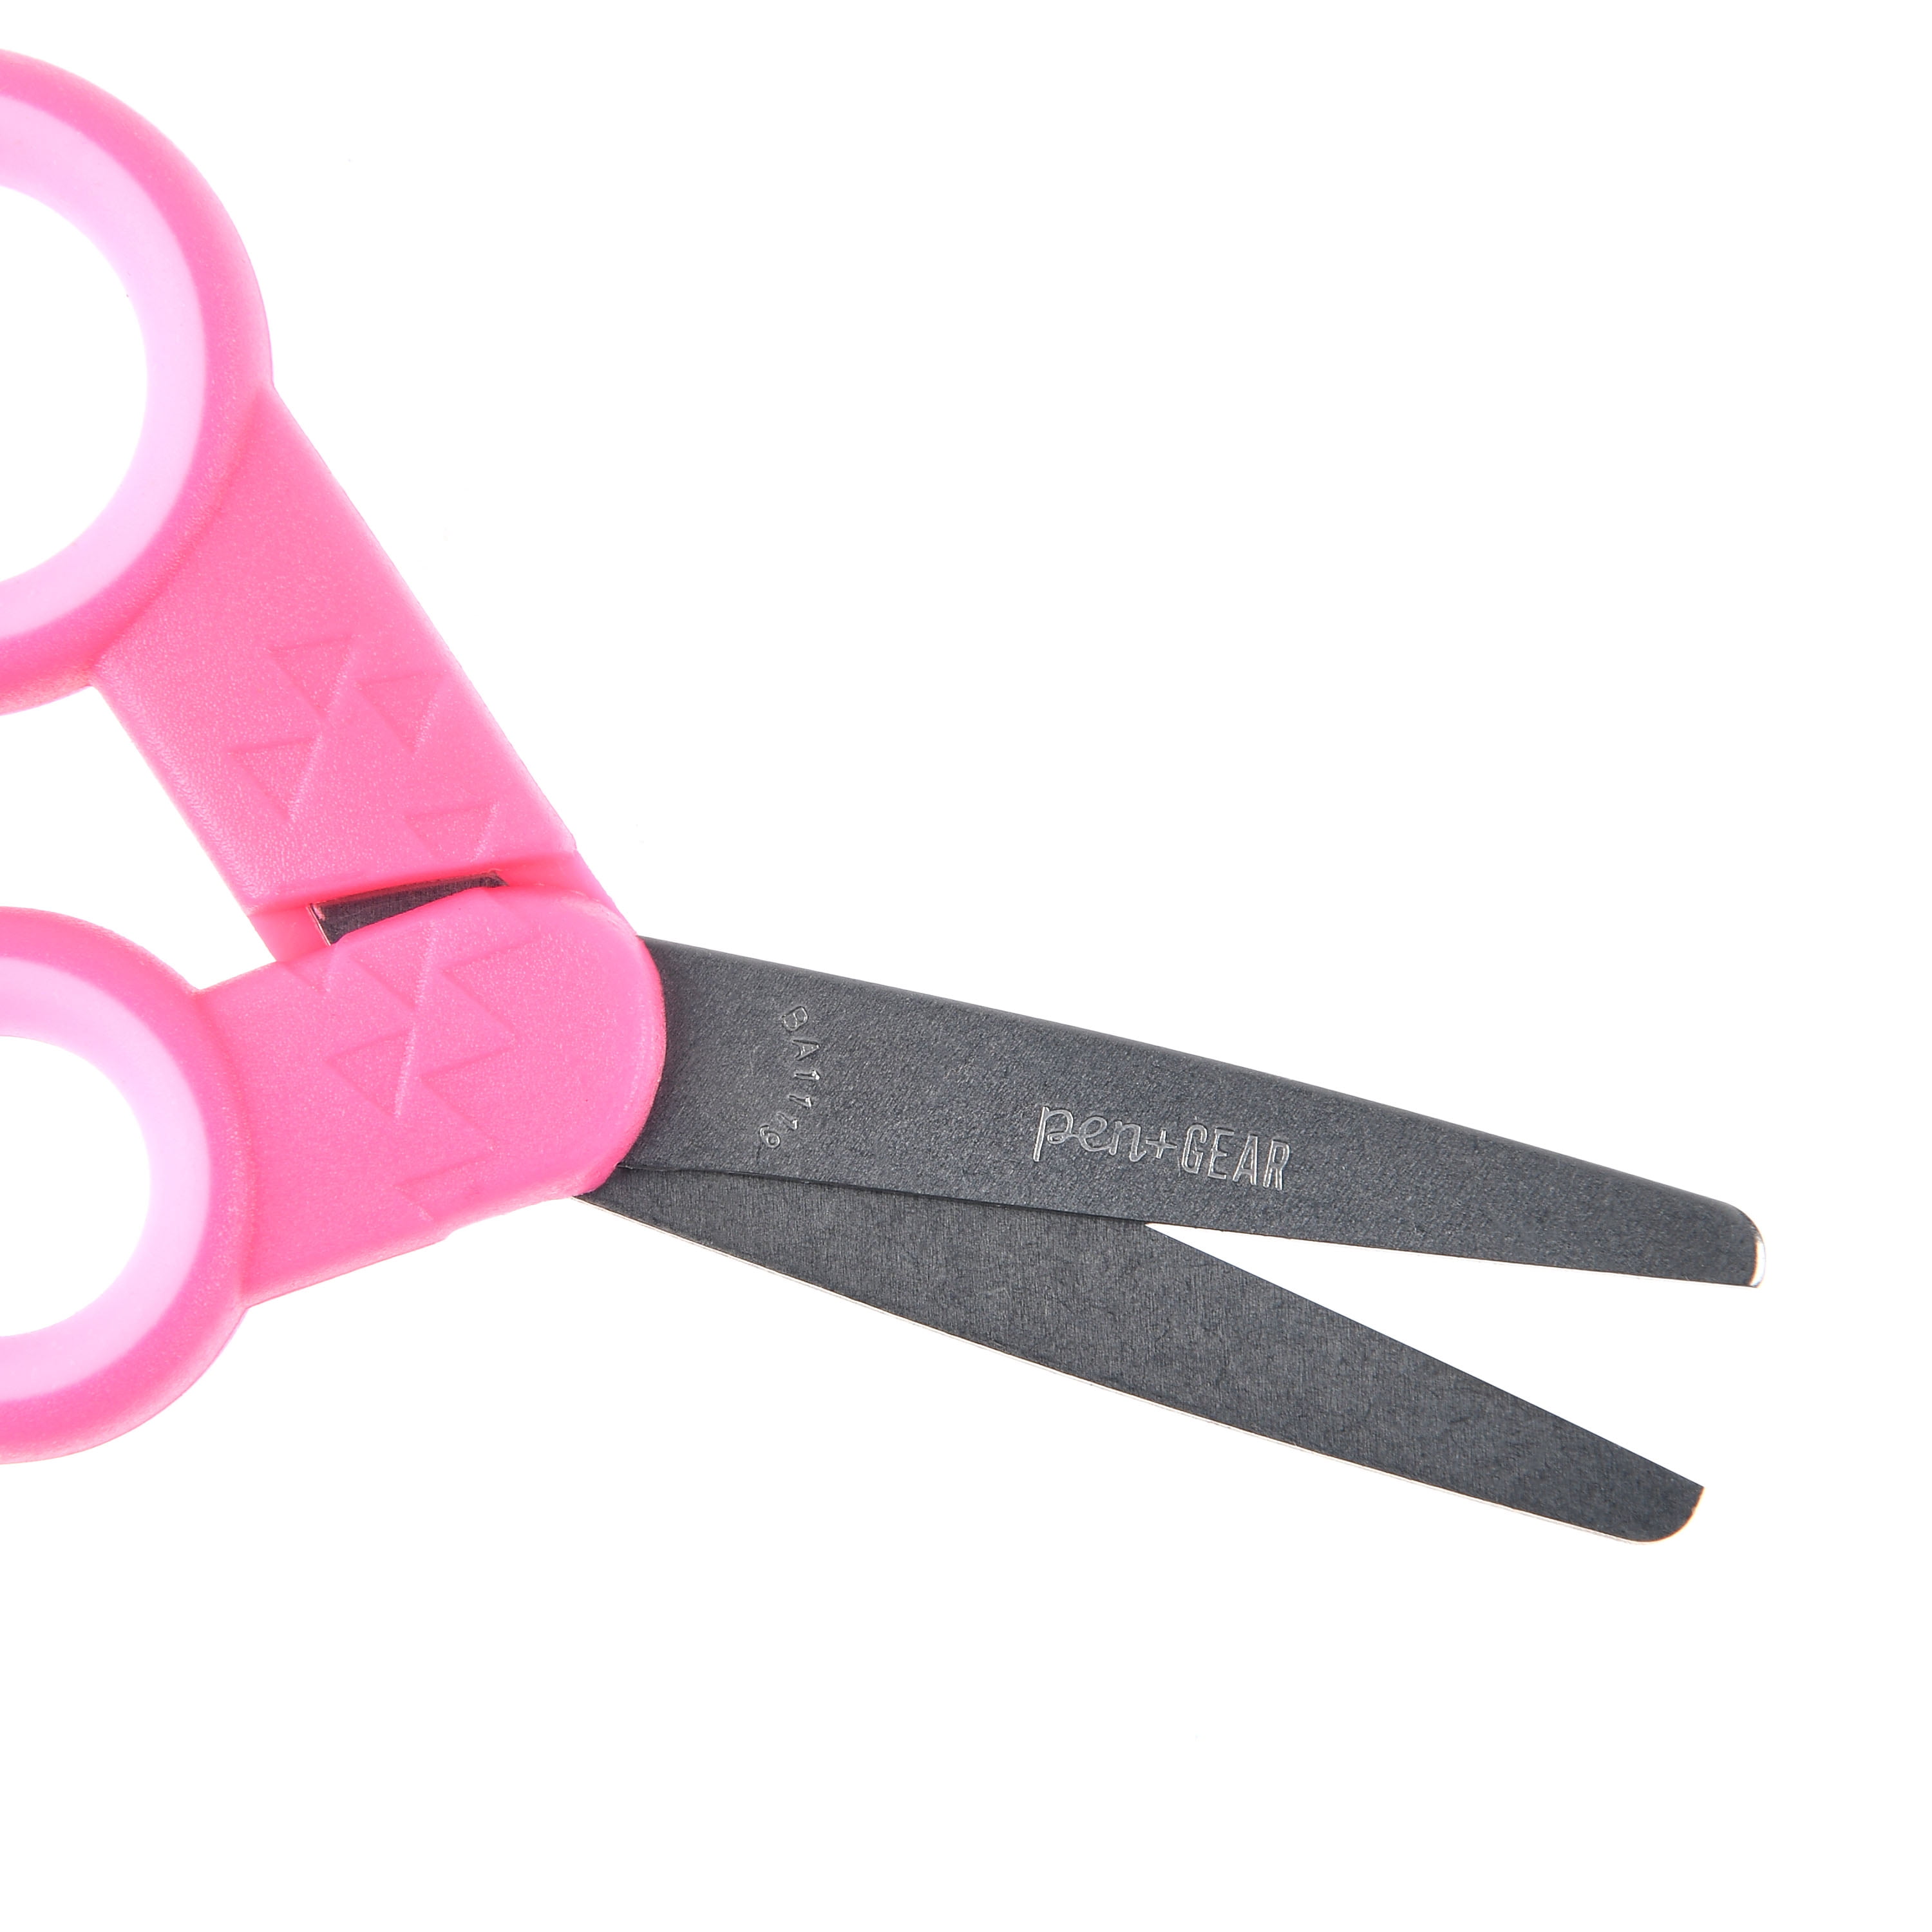 Glitter School Scissors, Kid School Scissors, Pink Scissors, Blue